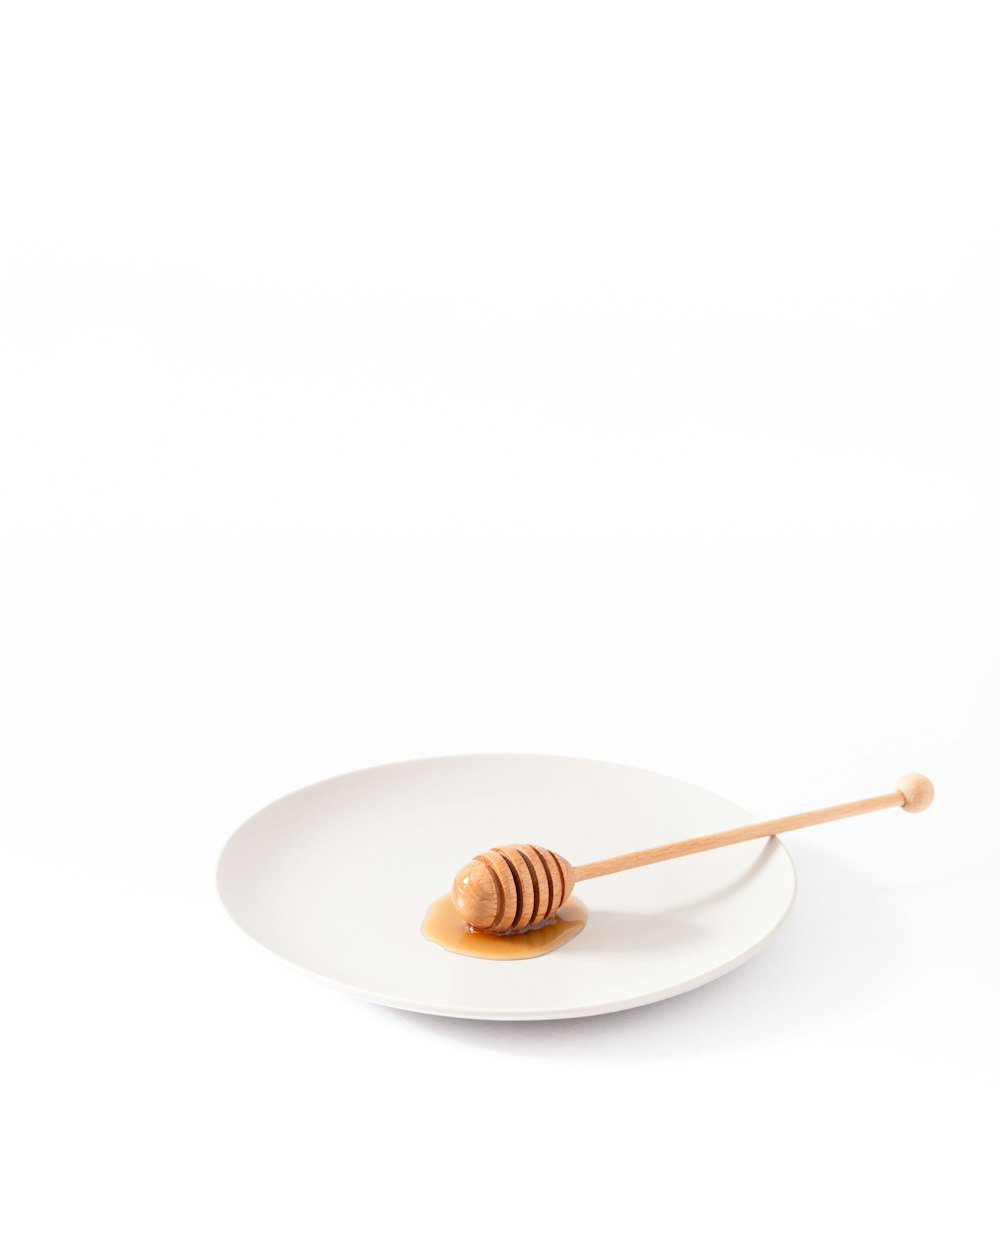 honey dipper on empty plate